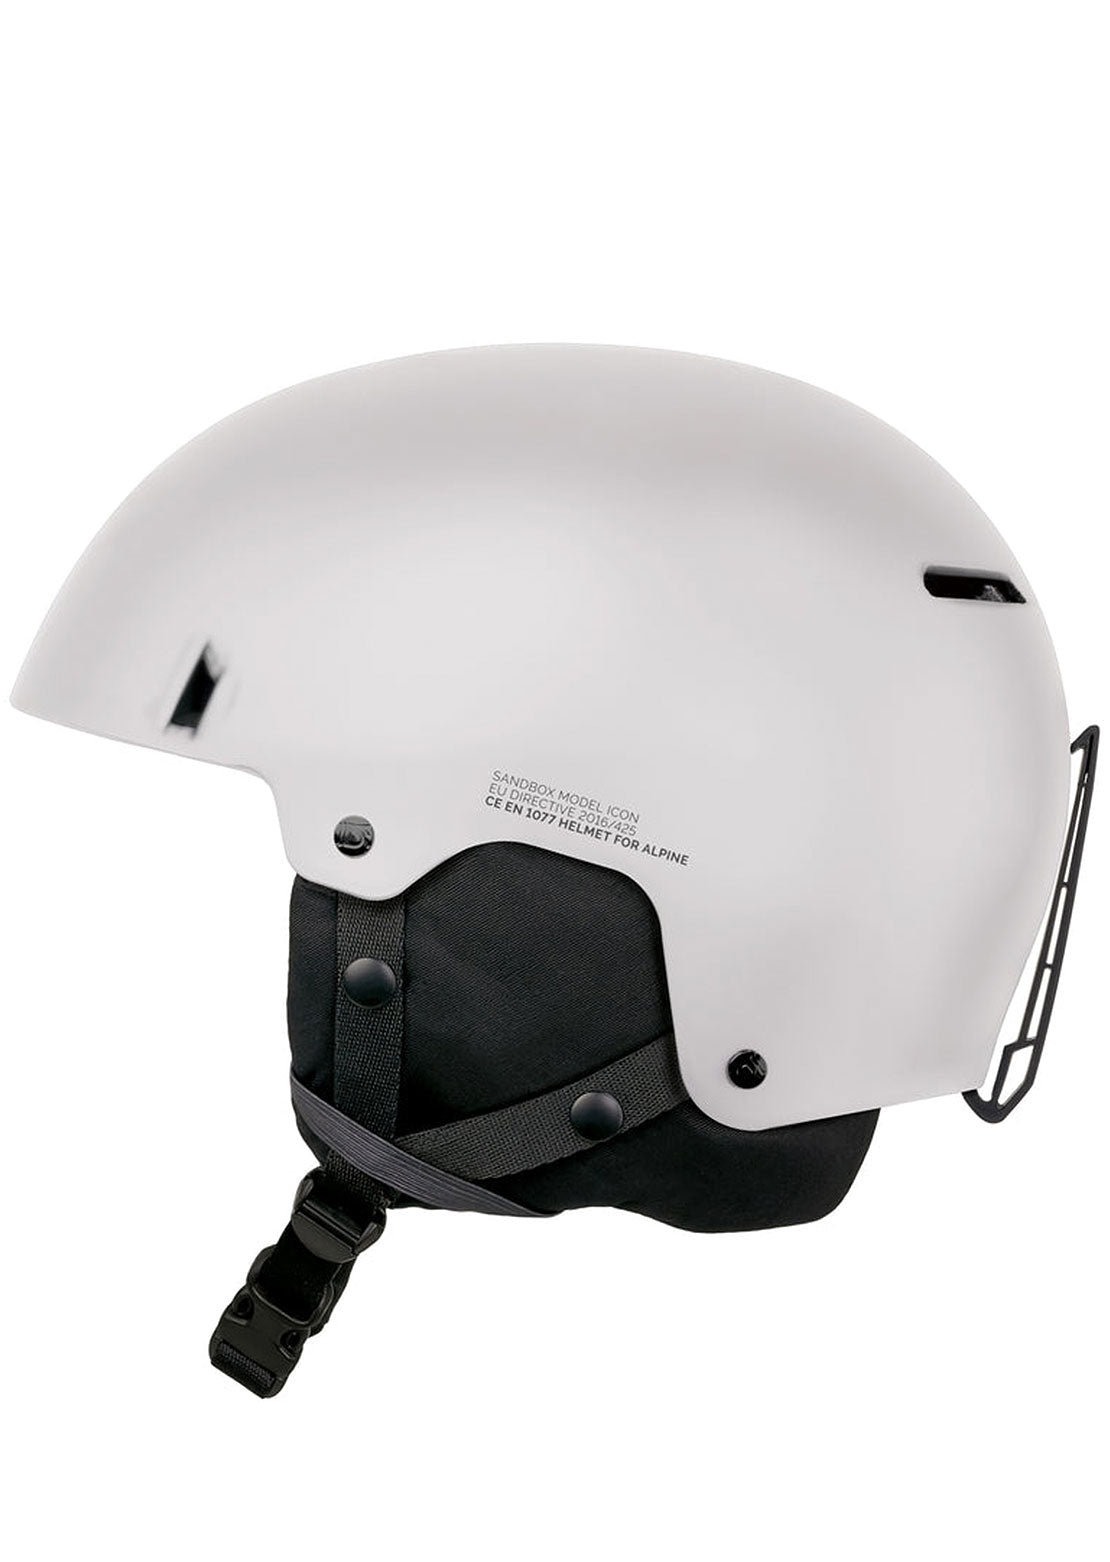 Sandbox Unisex Icon Snow Winter Helmet White